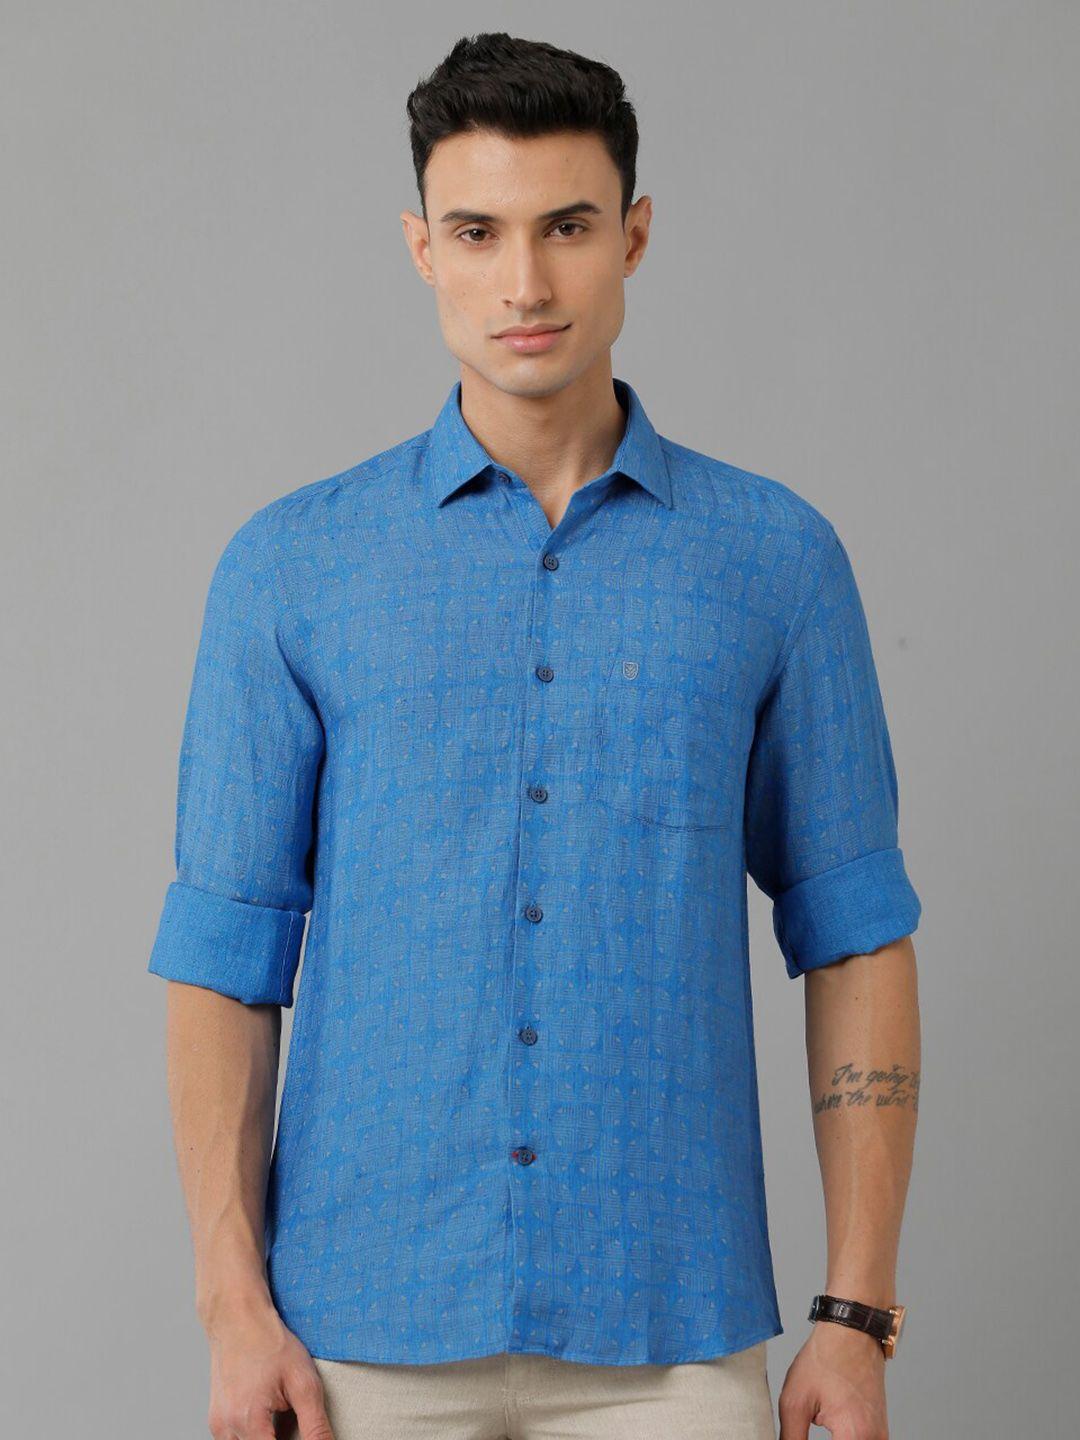 linen club geometric printed pure linen casual shirt